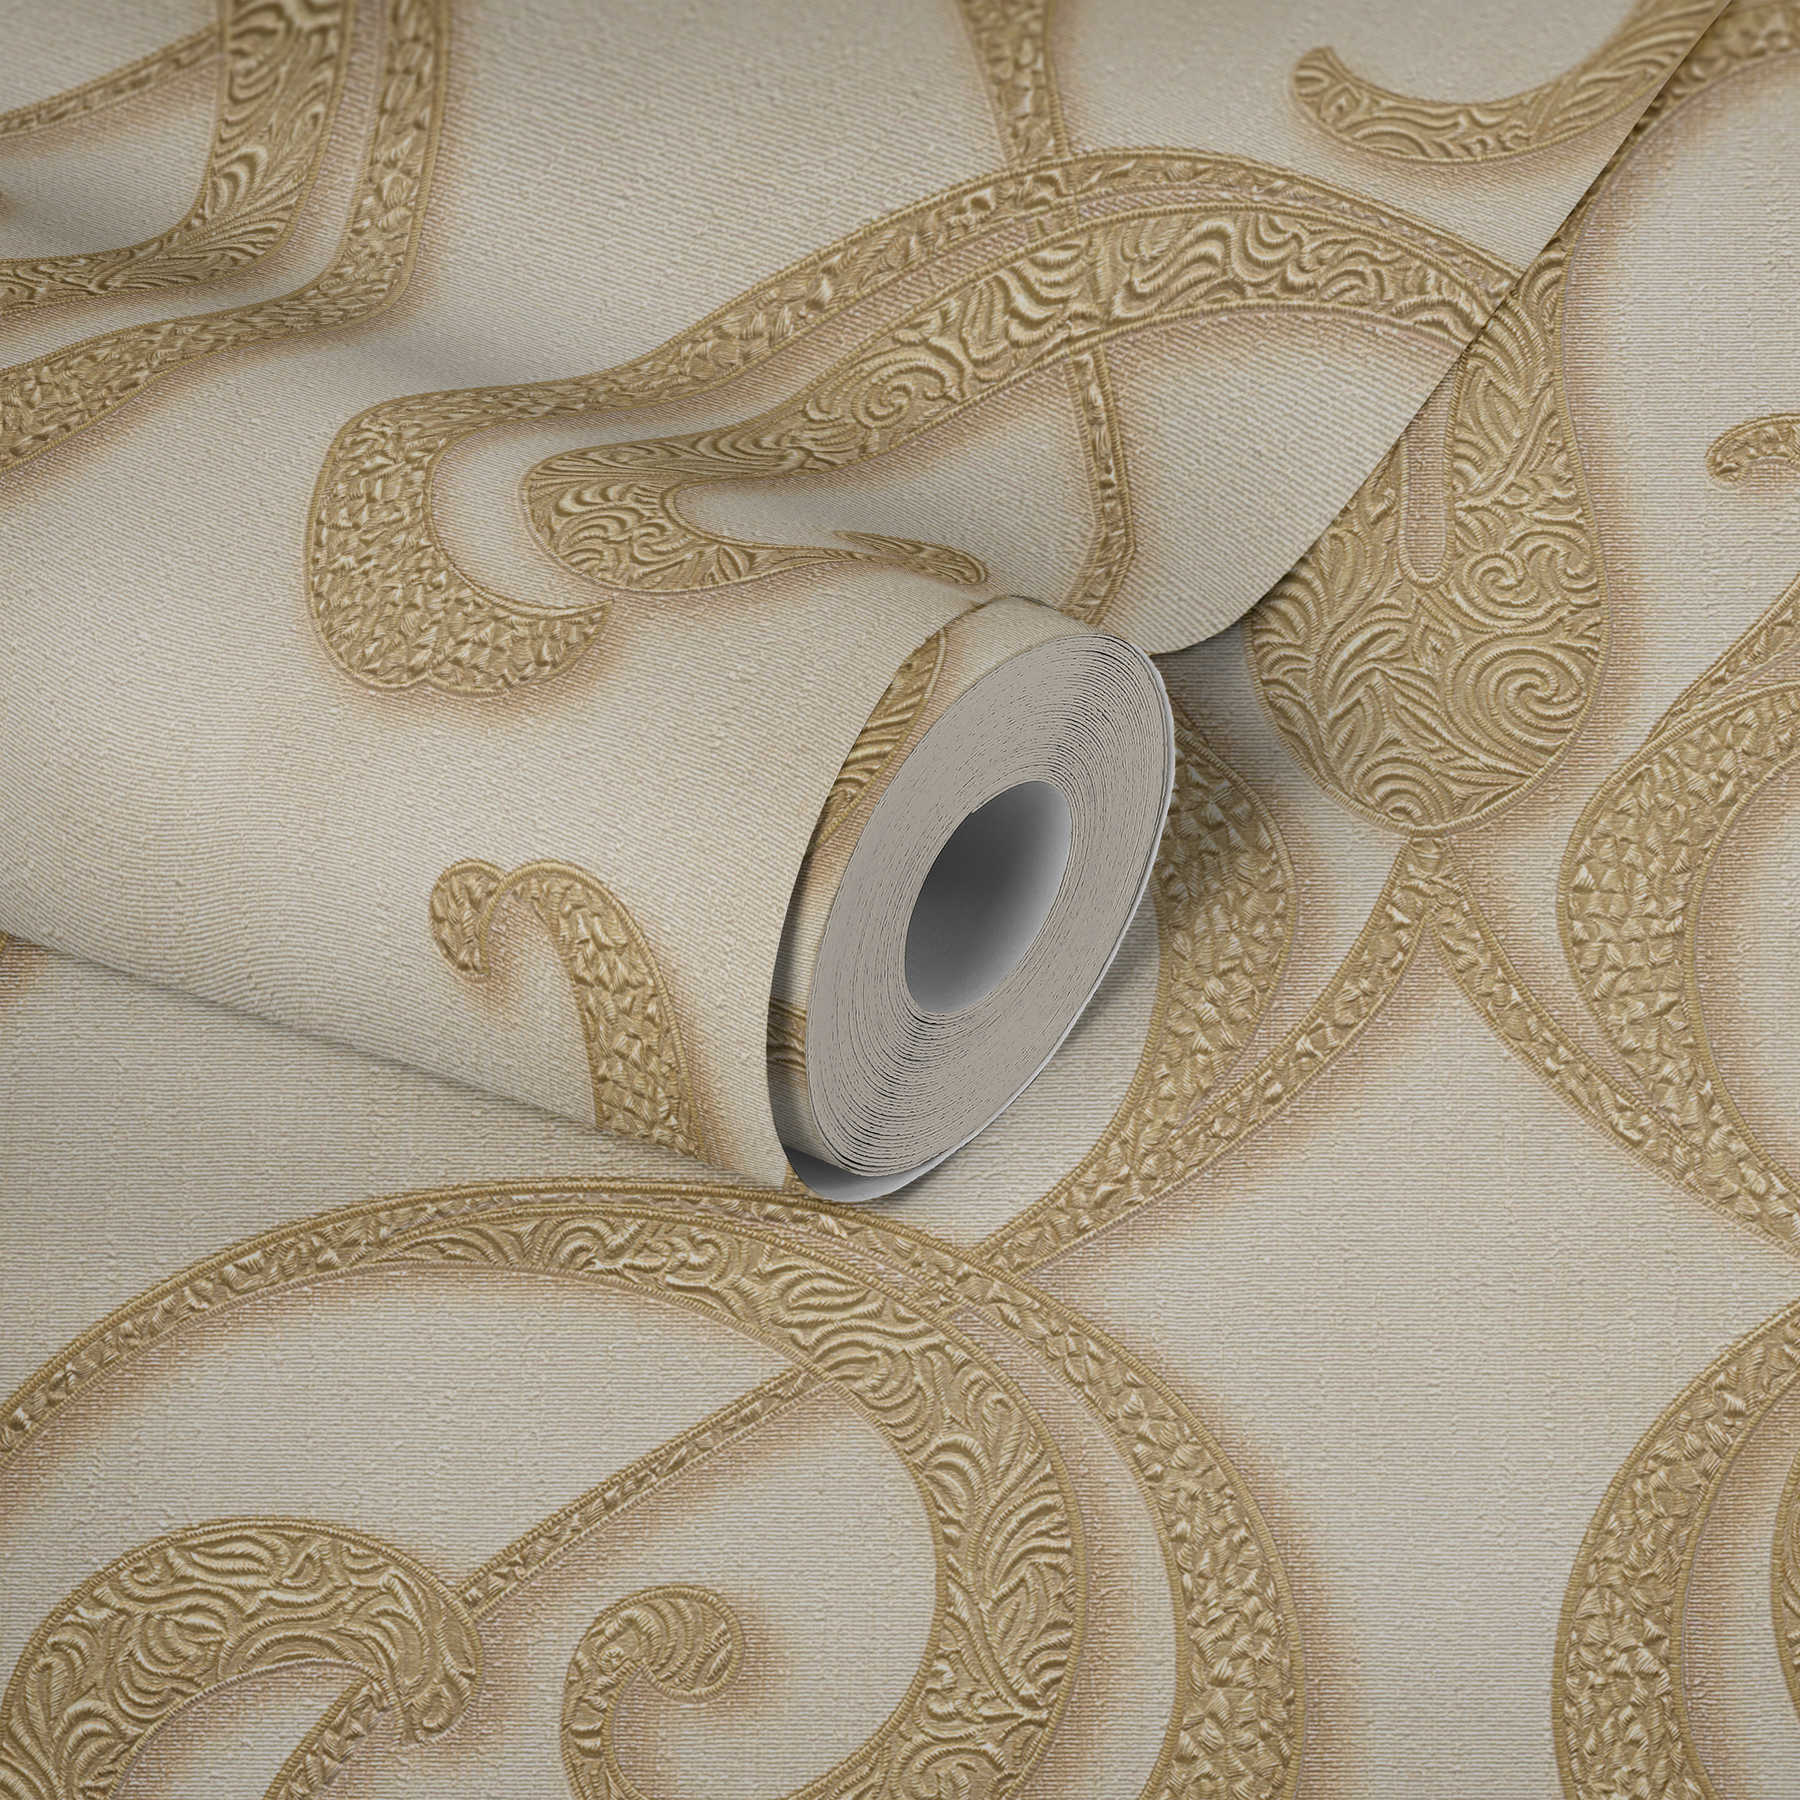             Metallic Tapete mit filigranem Ornamentmuster – Creme
        